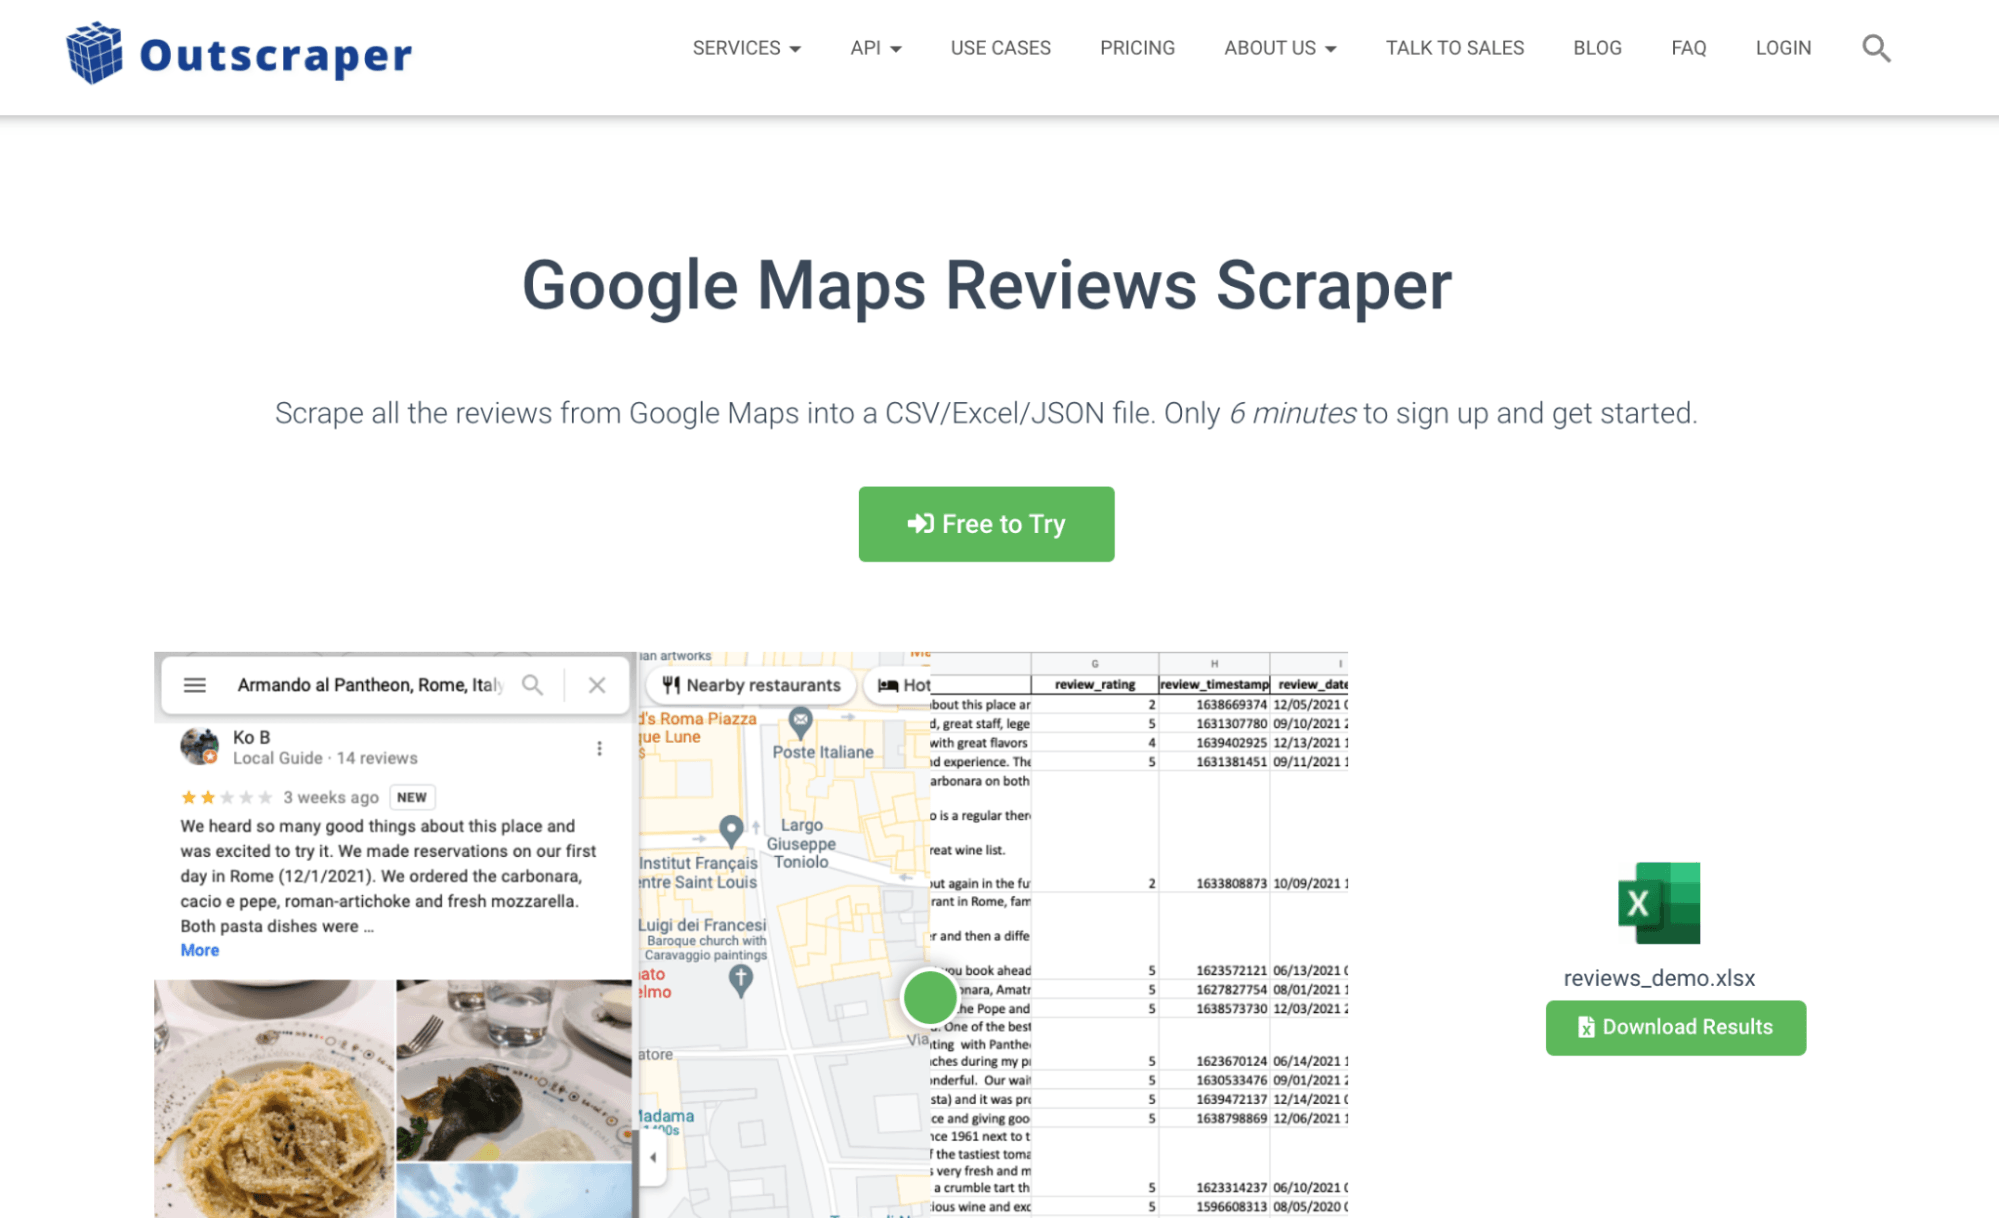 google maps reviews scraper outscraper product page - image33.png